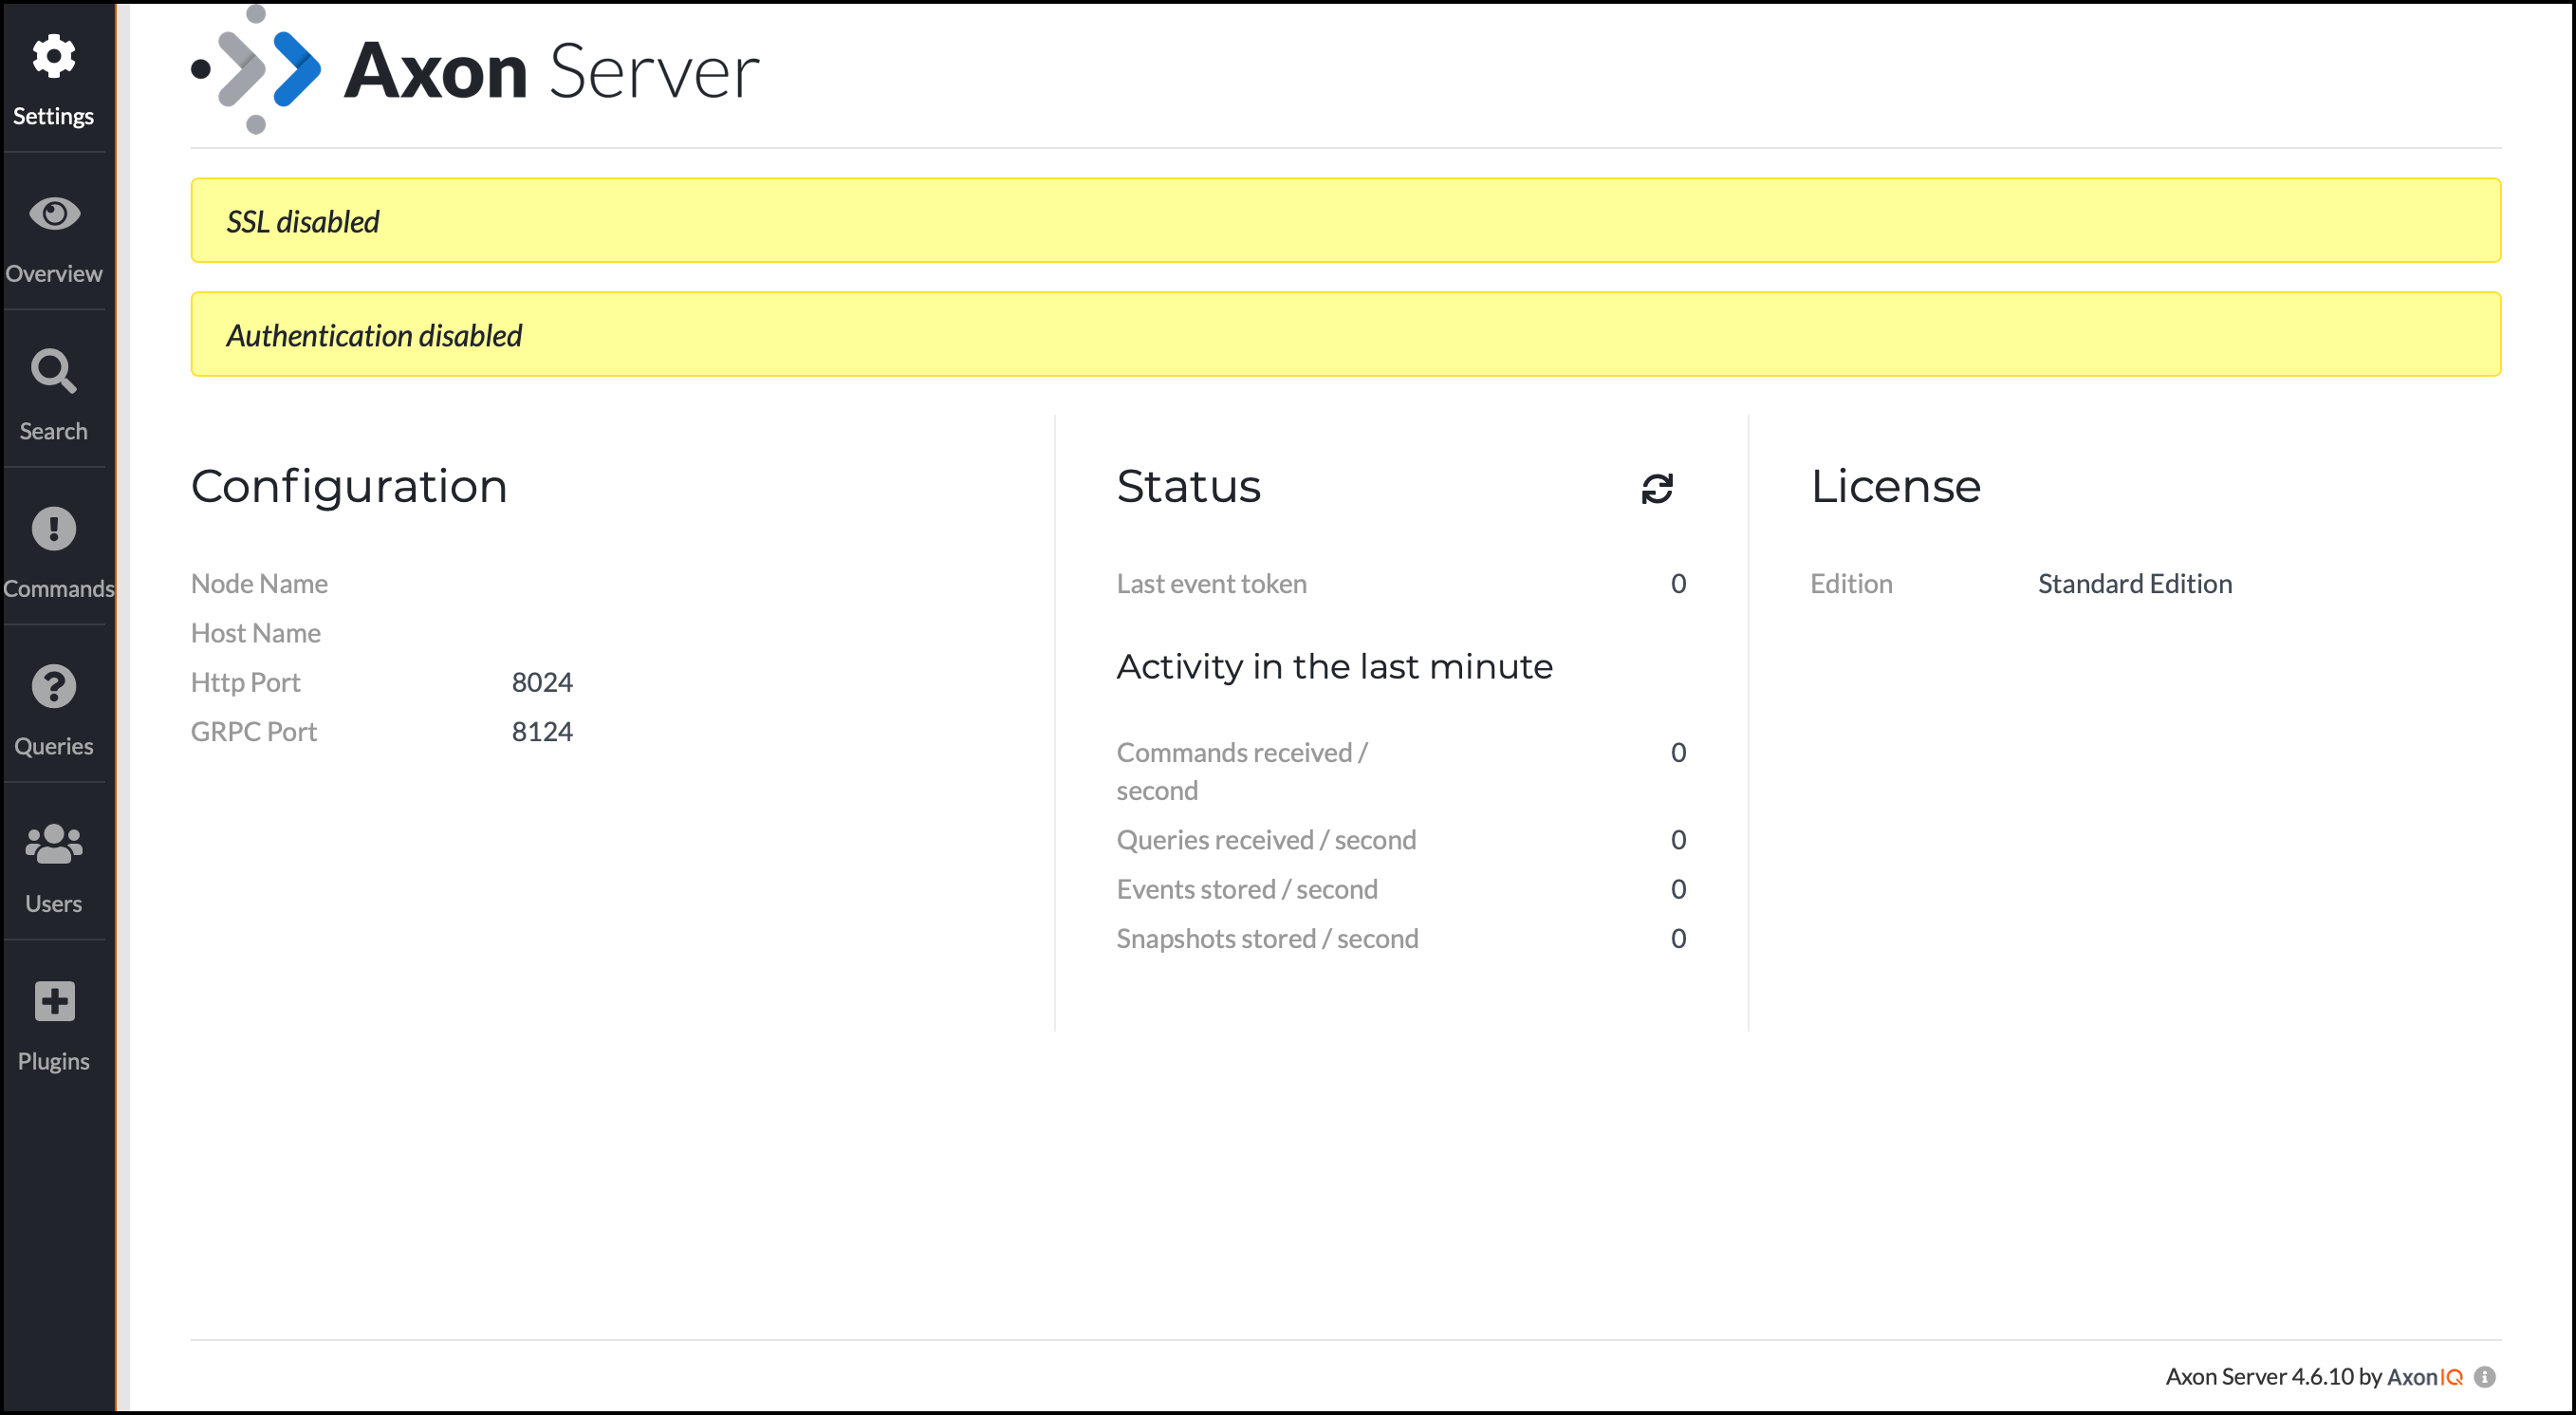 A screenshot of Axon Server’s Dashboard